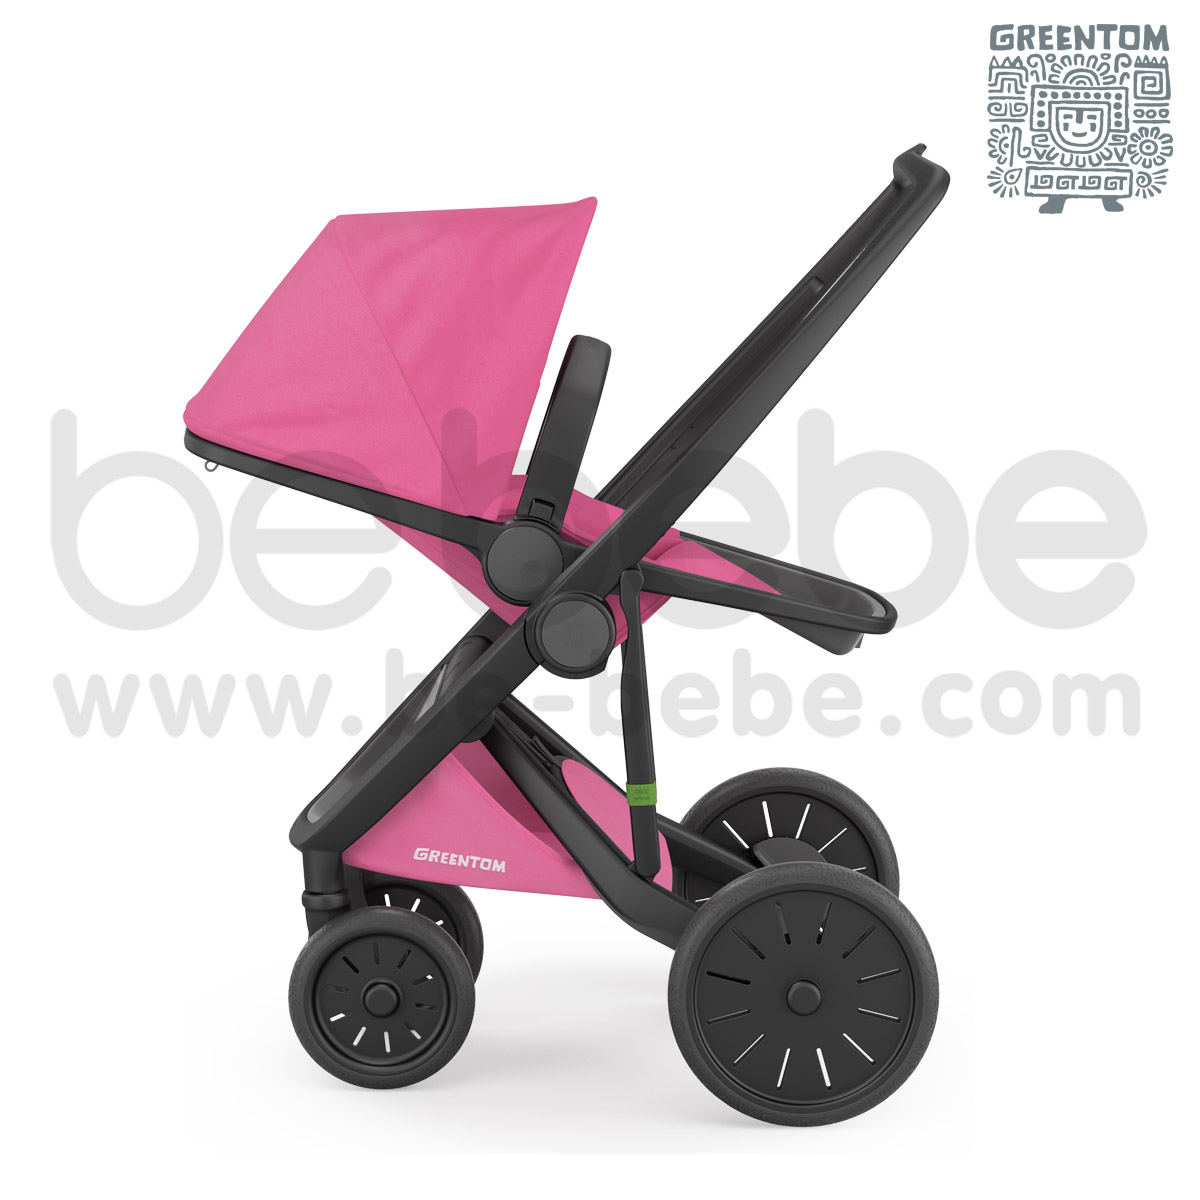 Greentom : Revesible Balck Frame Stroller - Pink 